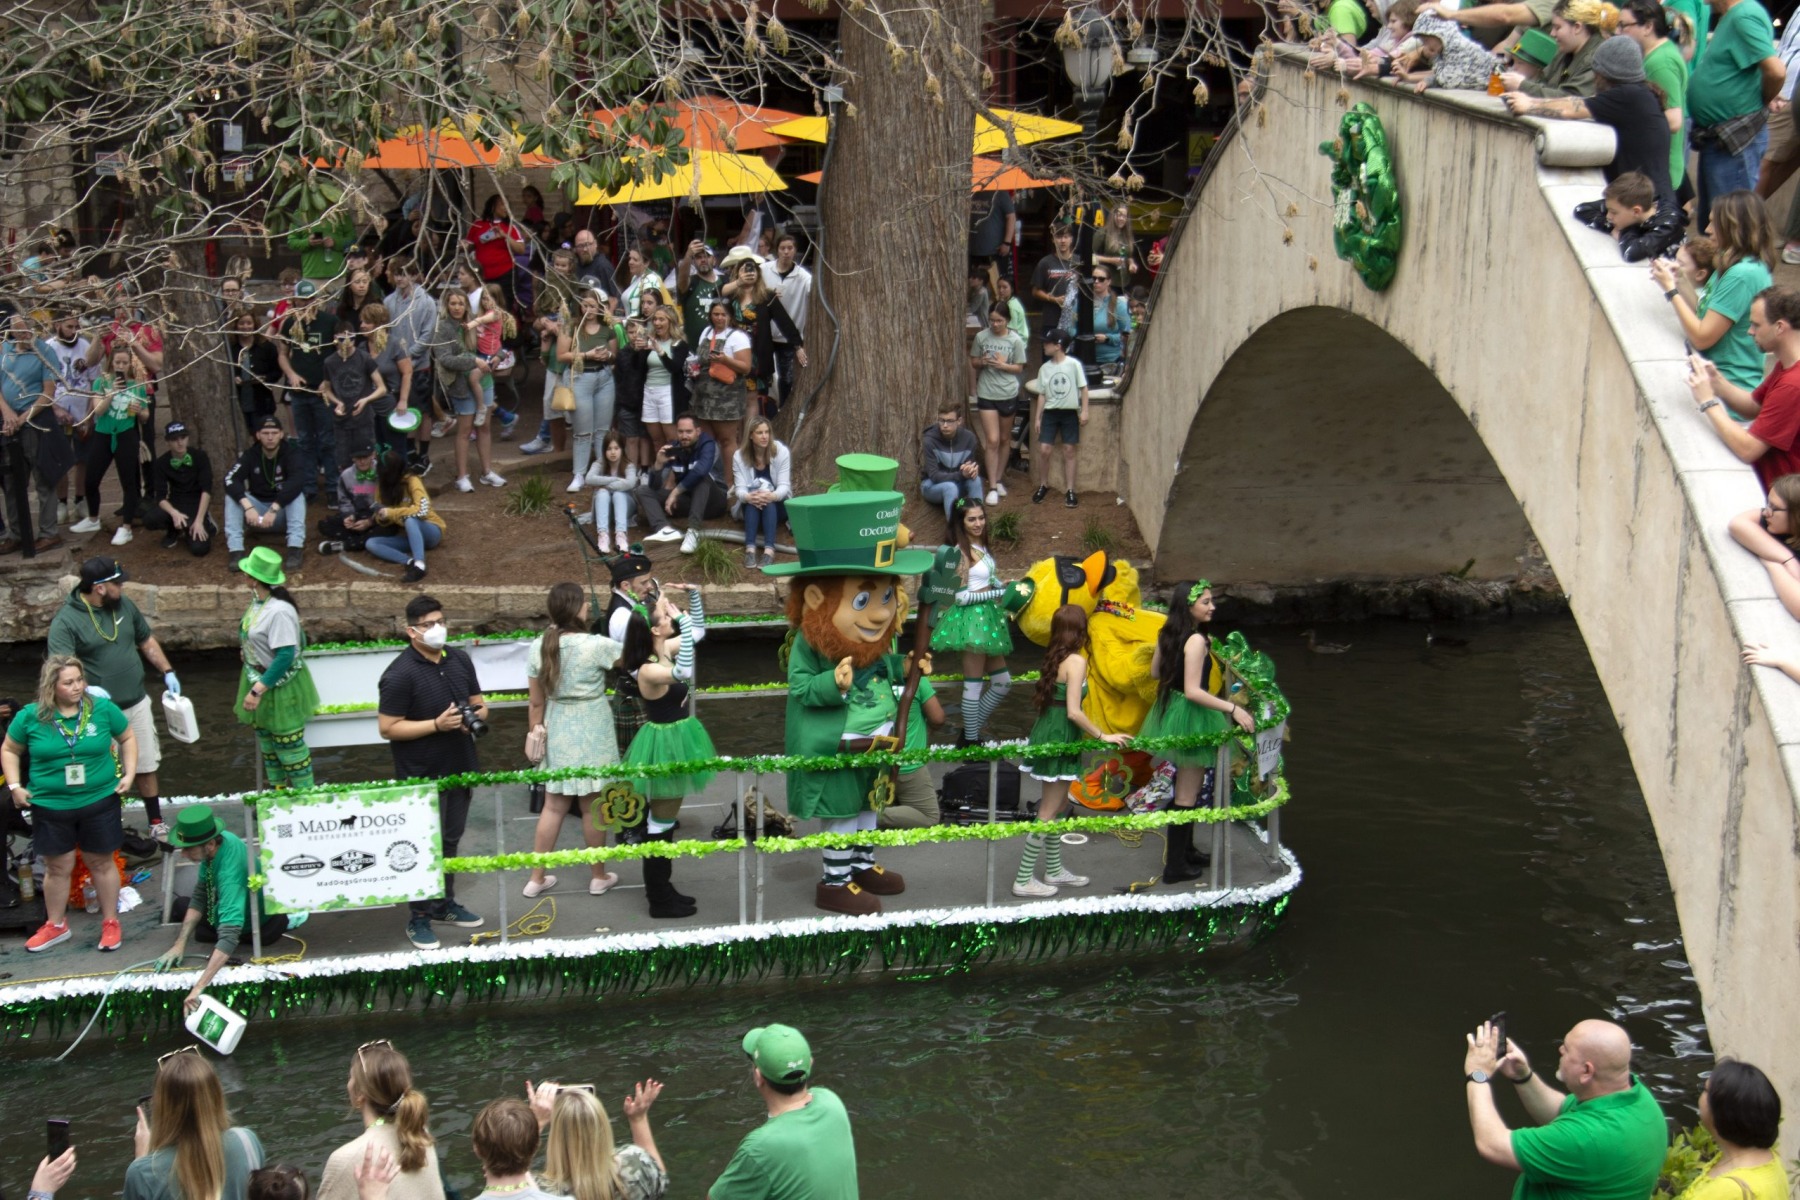 Photos: St. Patrick’s Day revelry consumes River Walk, downtown San Antonio